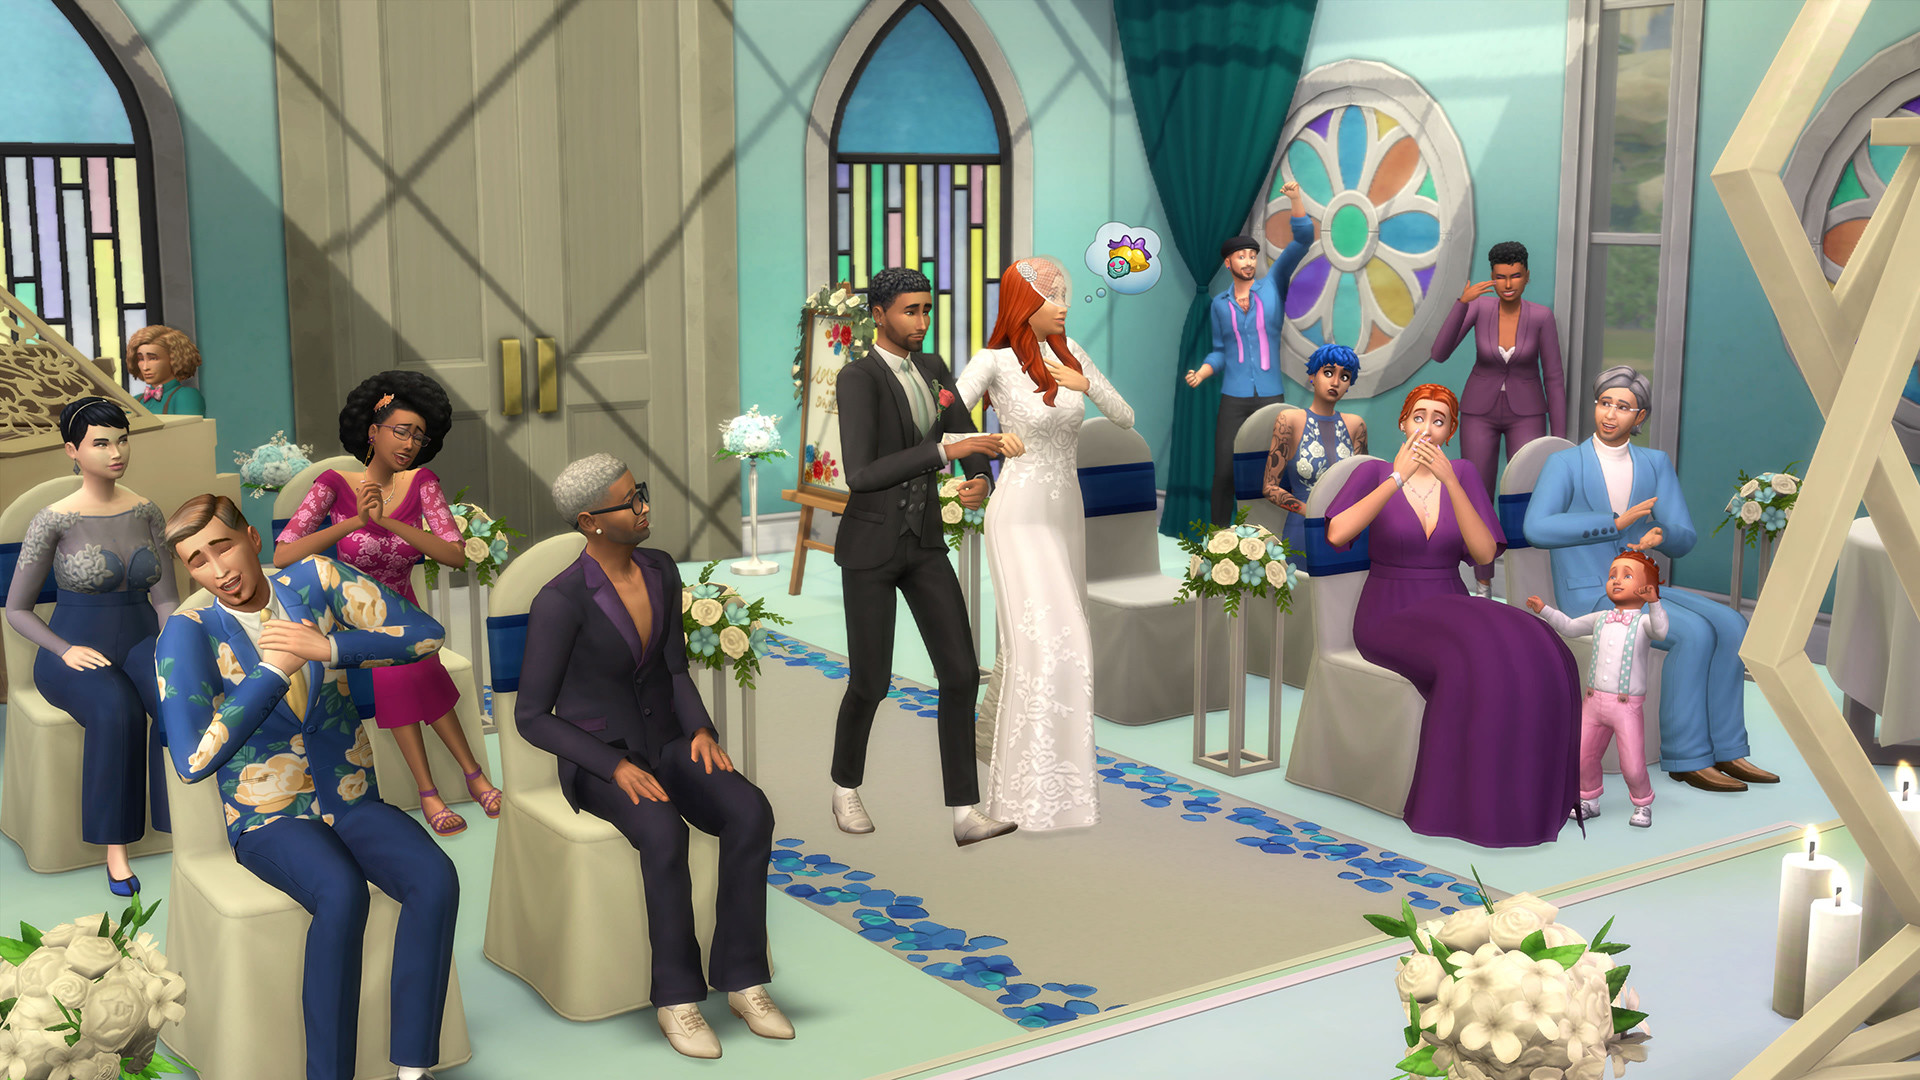 The Sims 4 - My Wedding Stories Game Pack DLC Origin CD Key